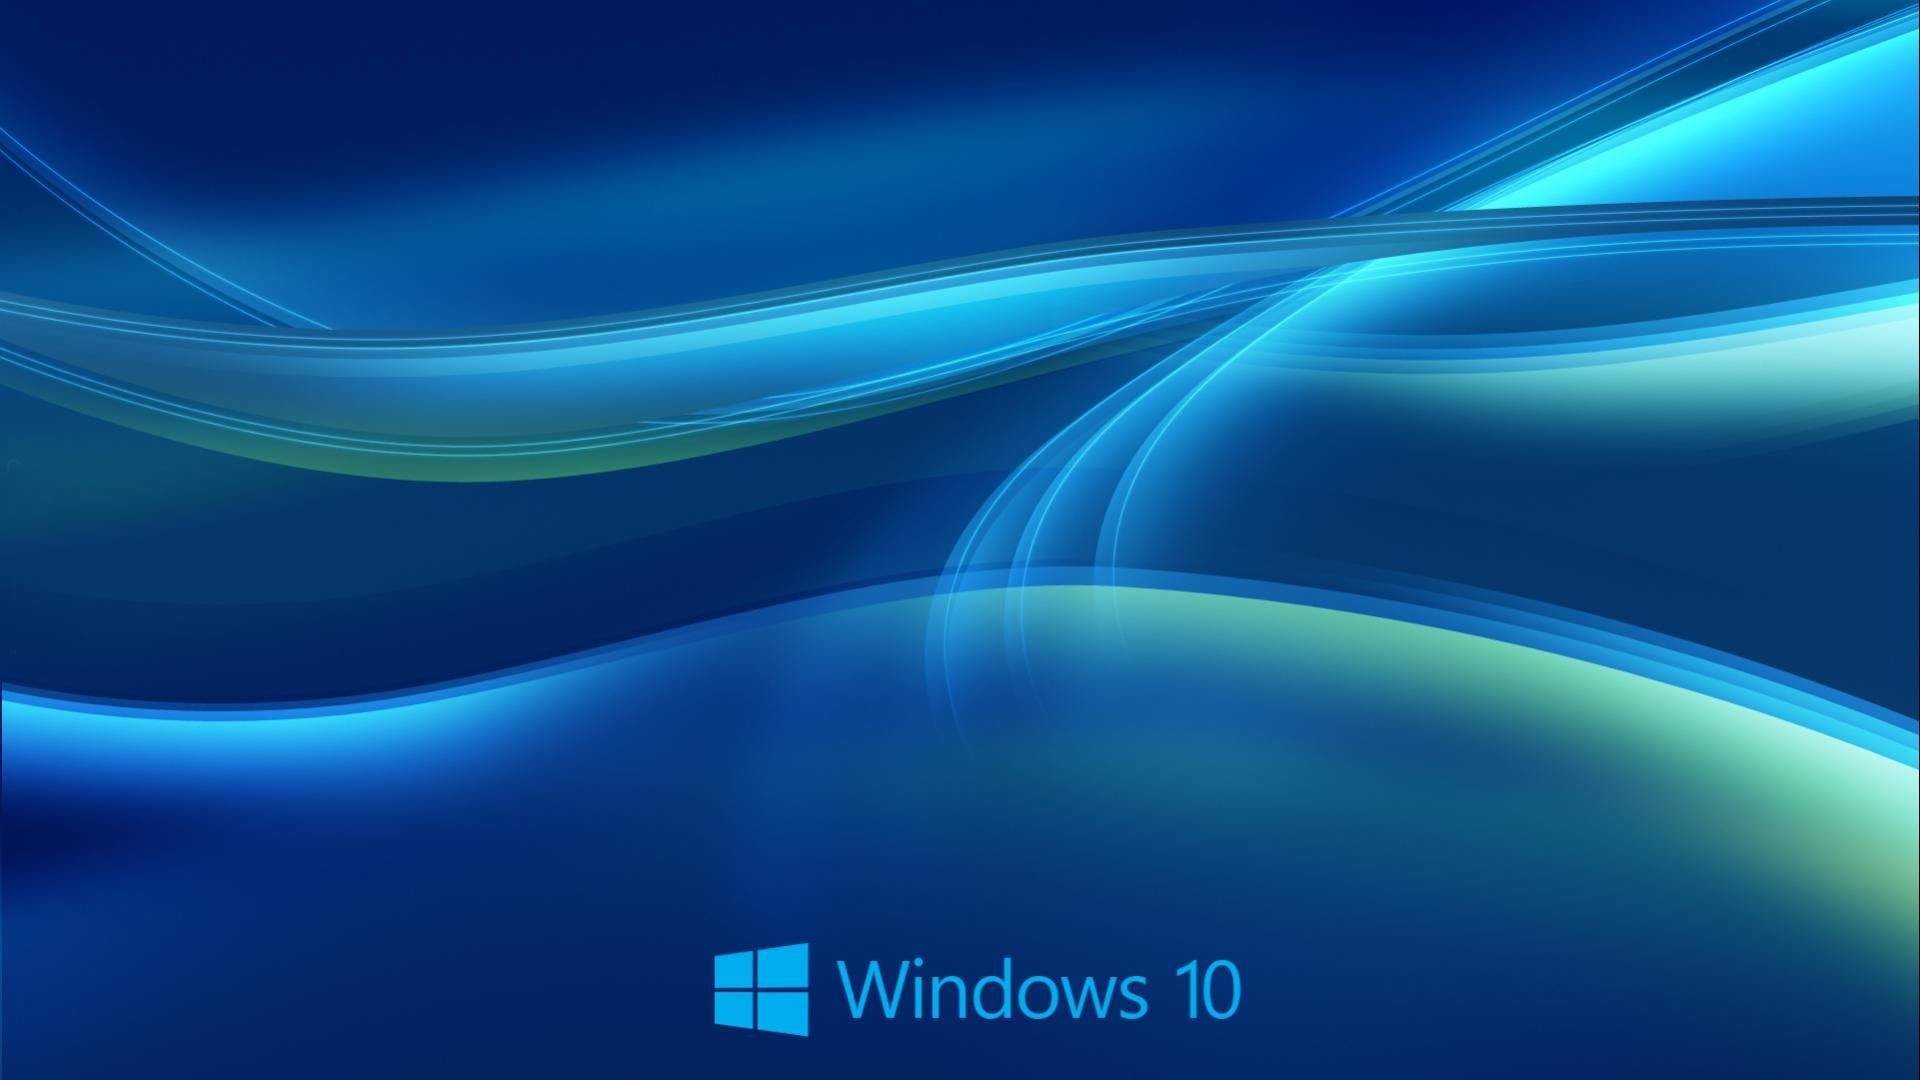 1920x1080 Windows 10 HD Wallpaper  - WallpaperSafari